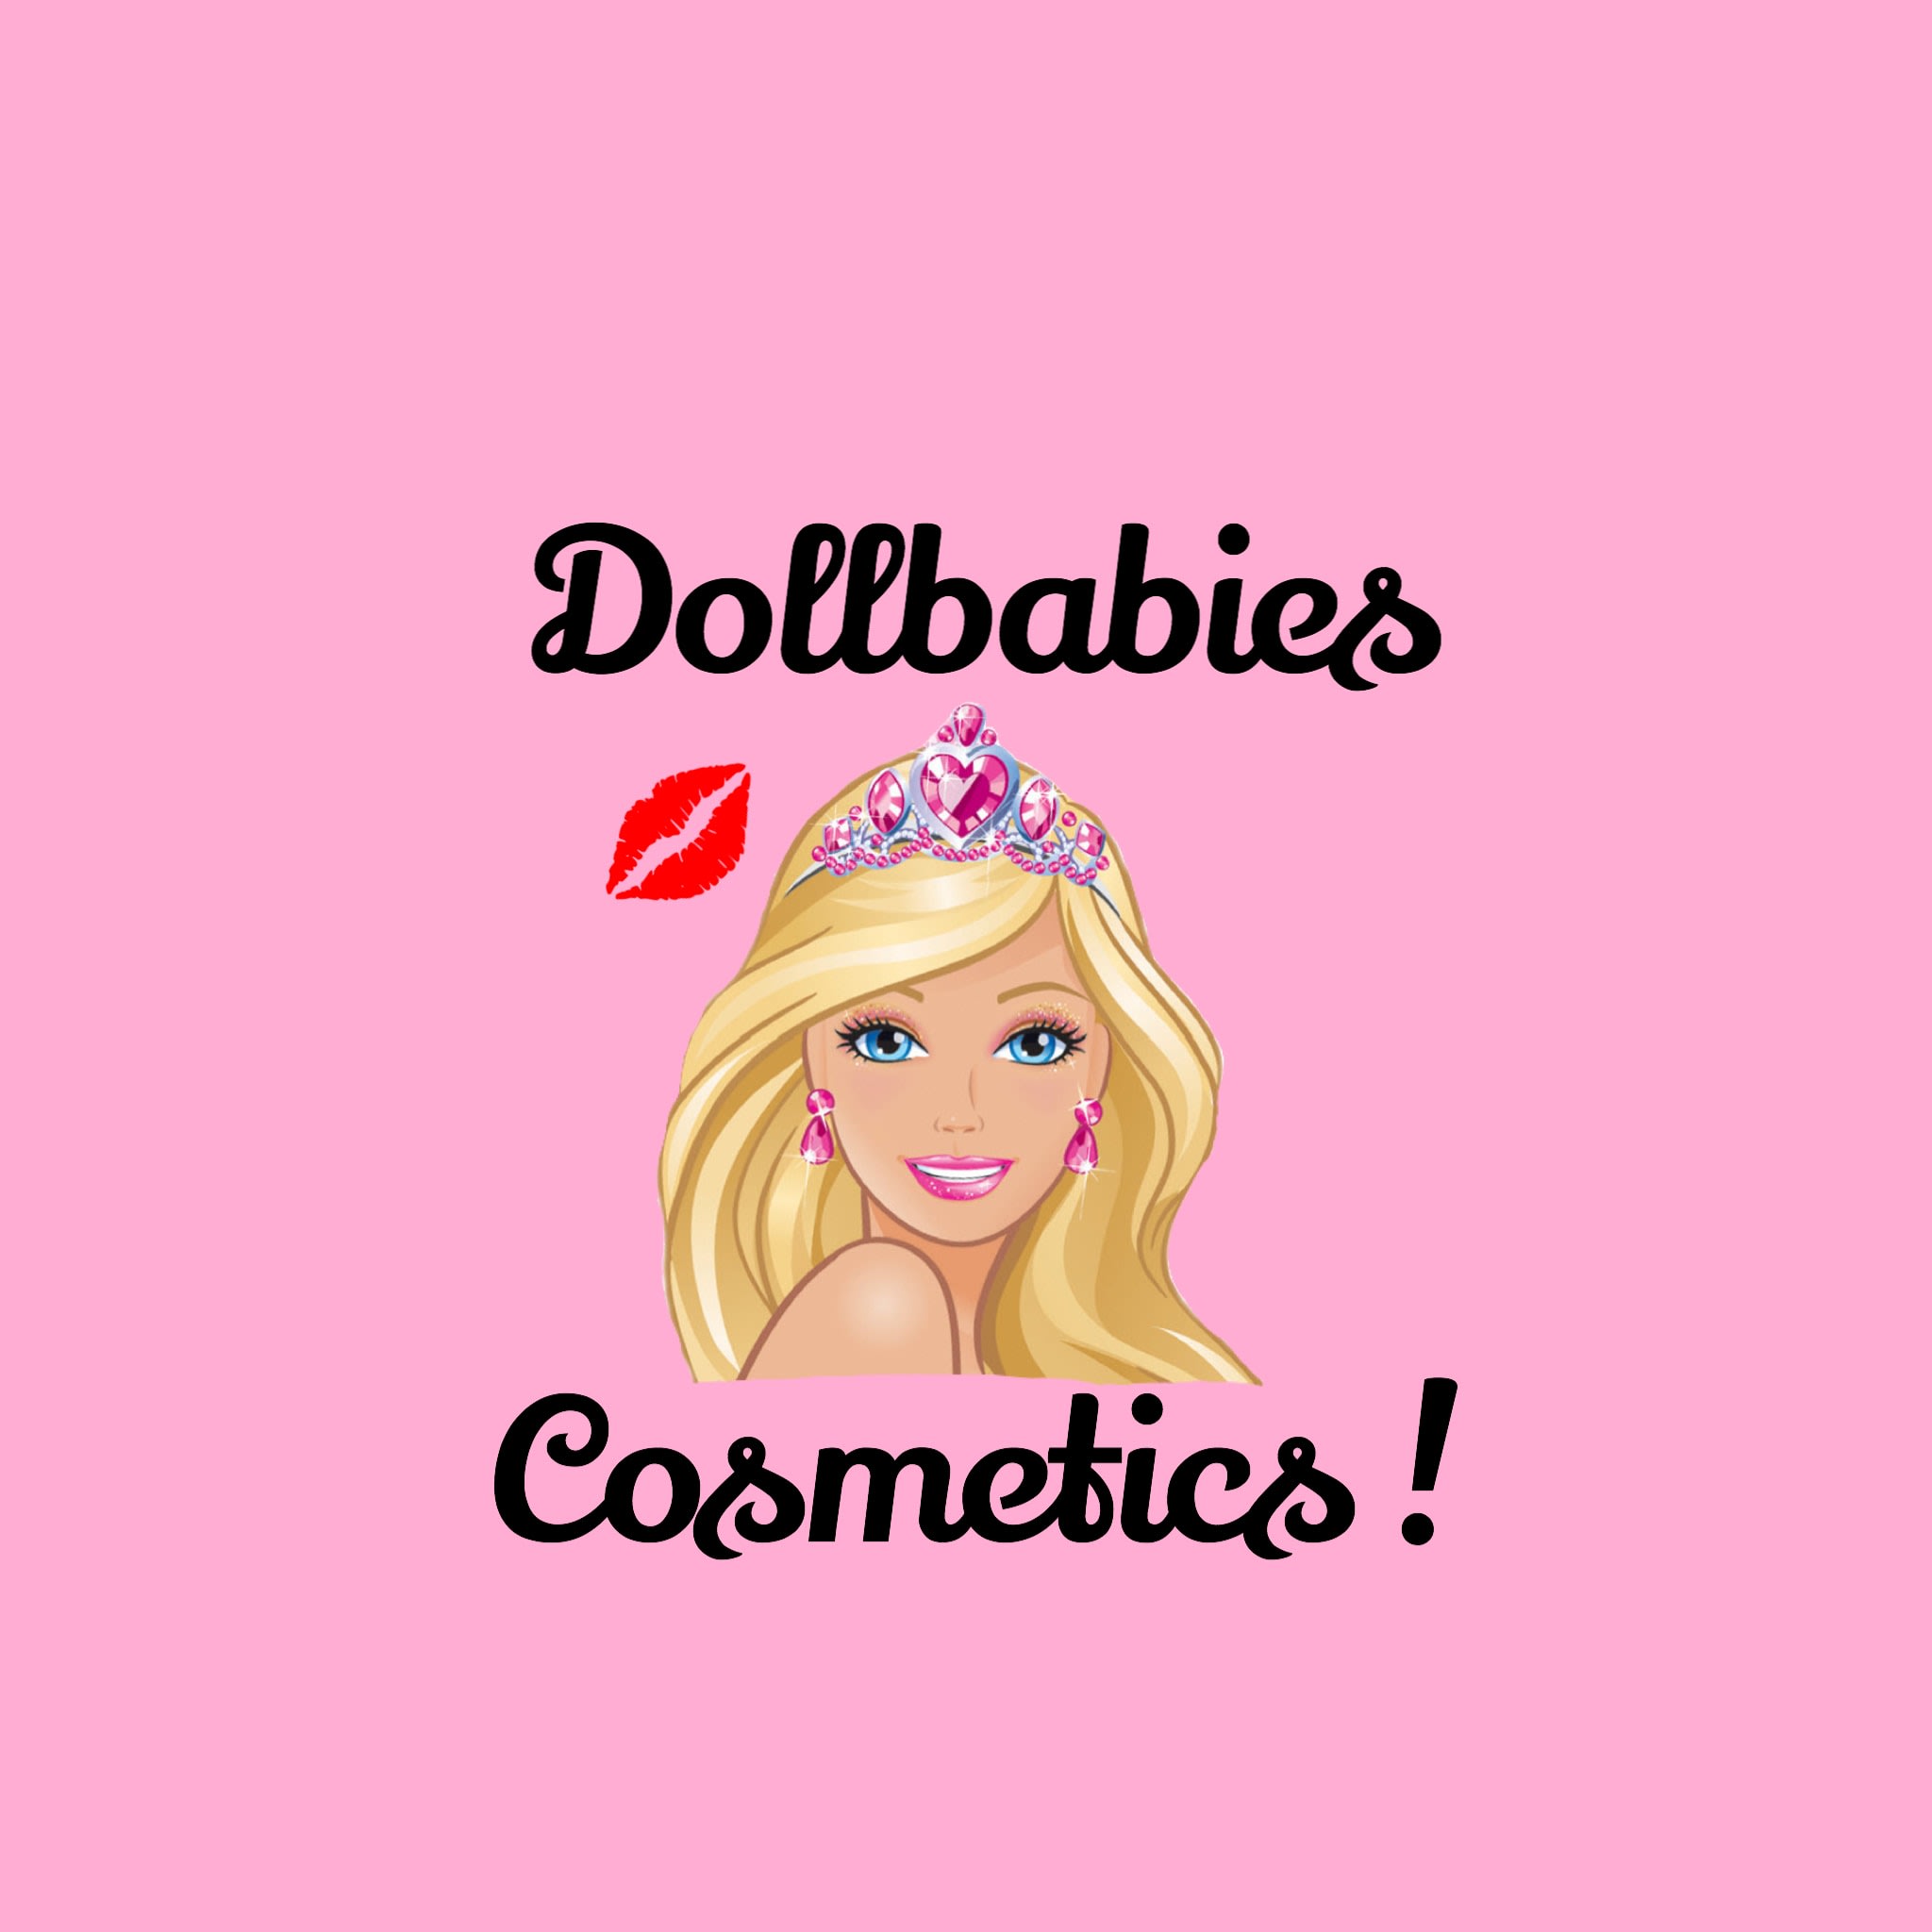 Dollbabies Cosmetics